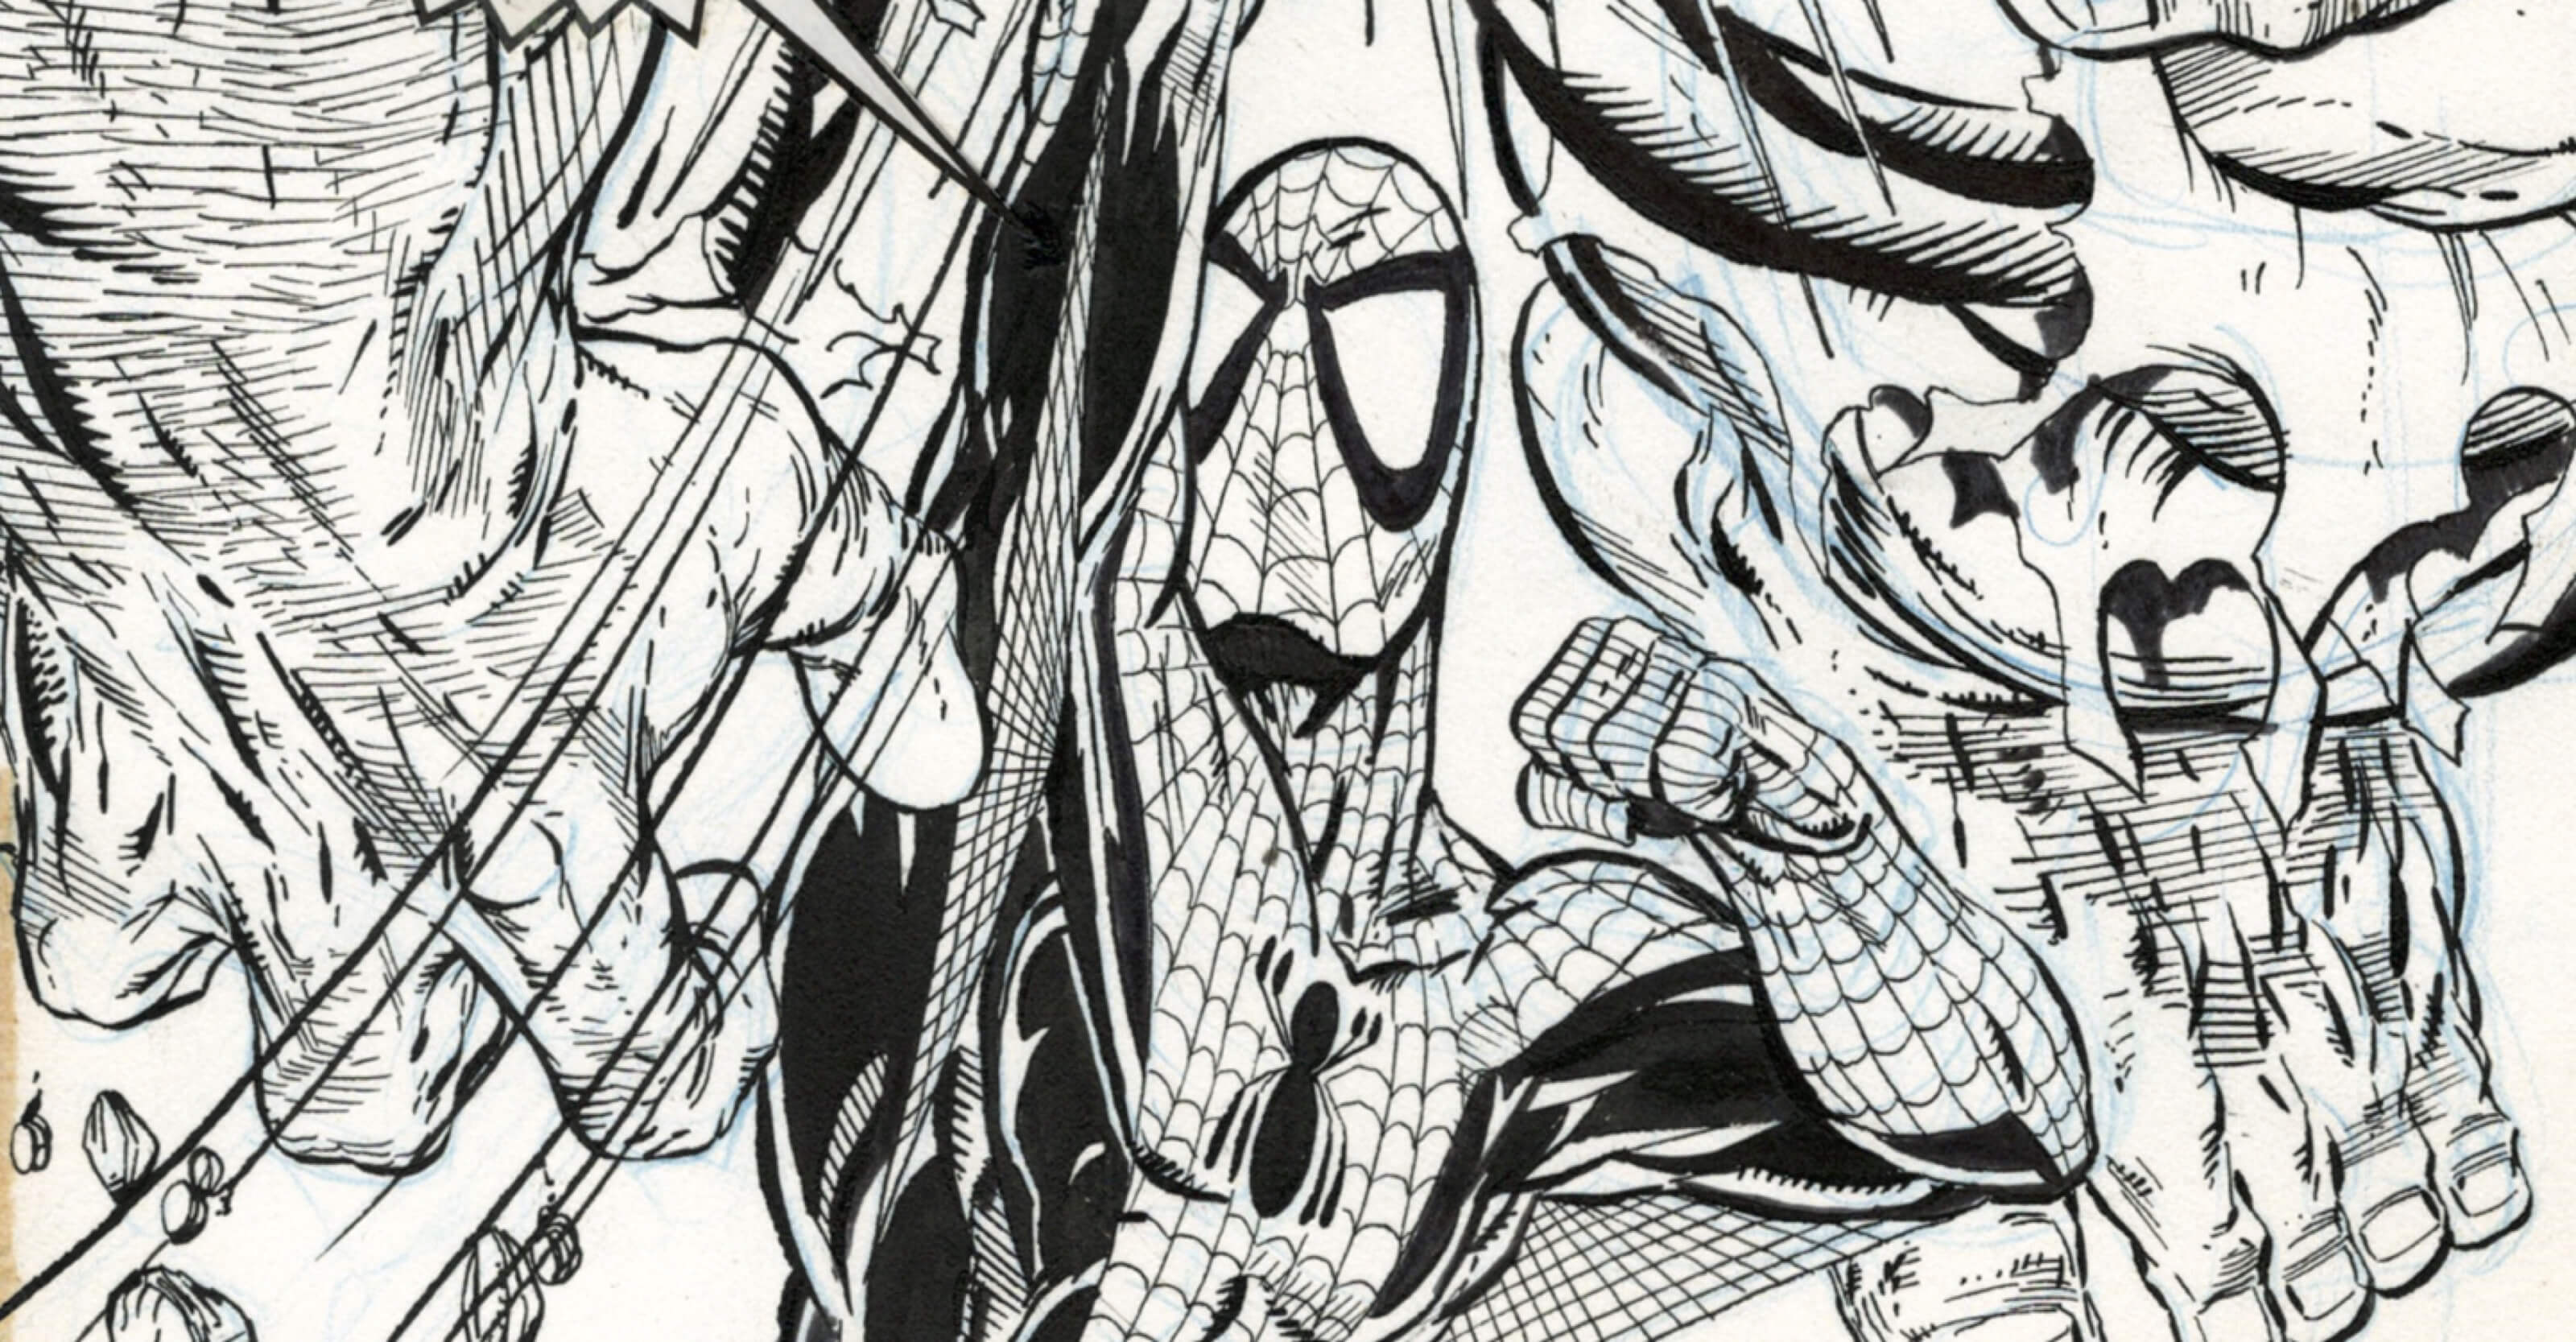 IDW Publishing Announces Todd McFarlane's Spider-Man Artist's Edition